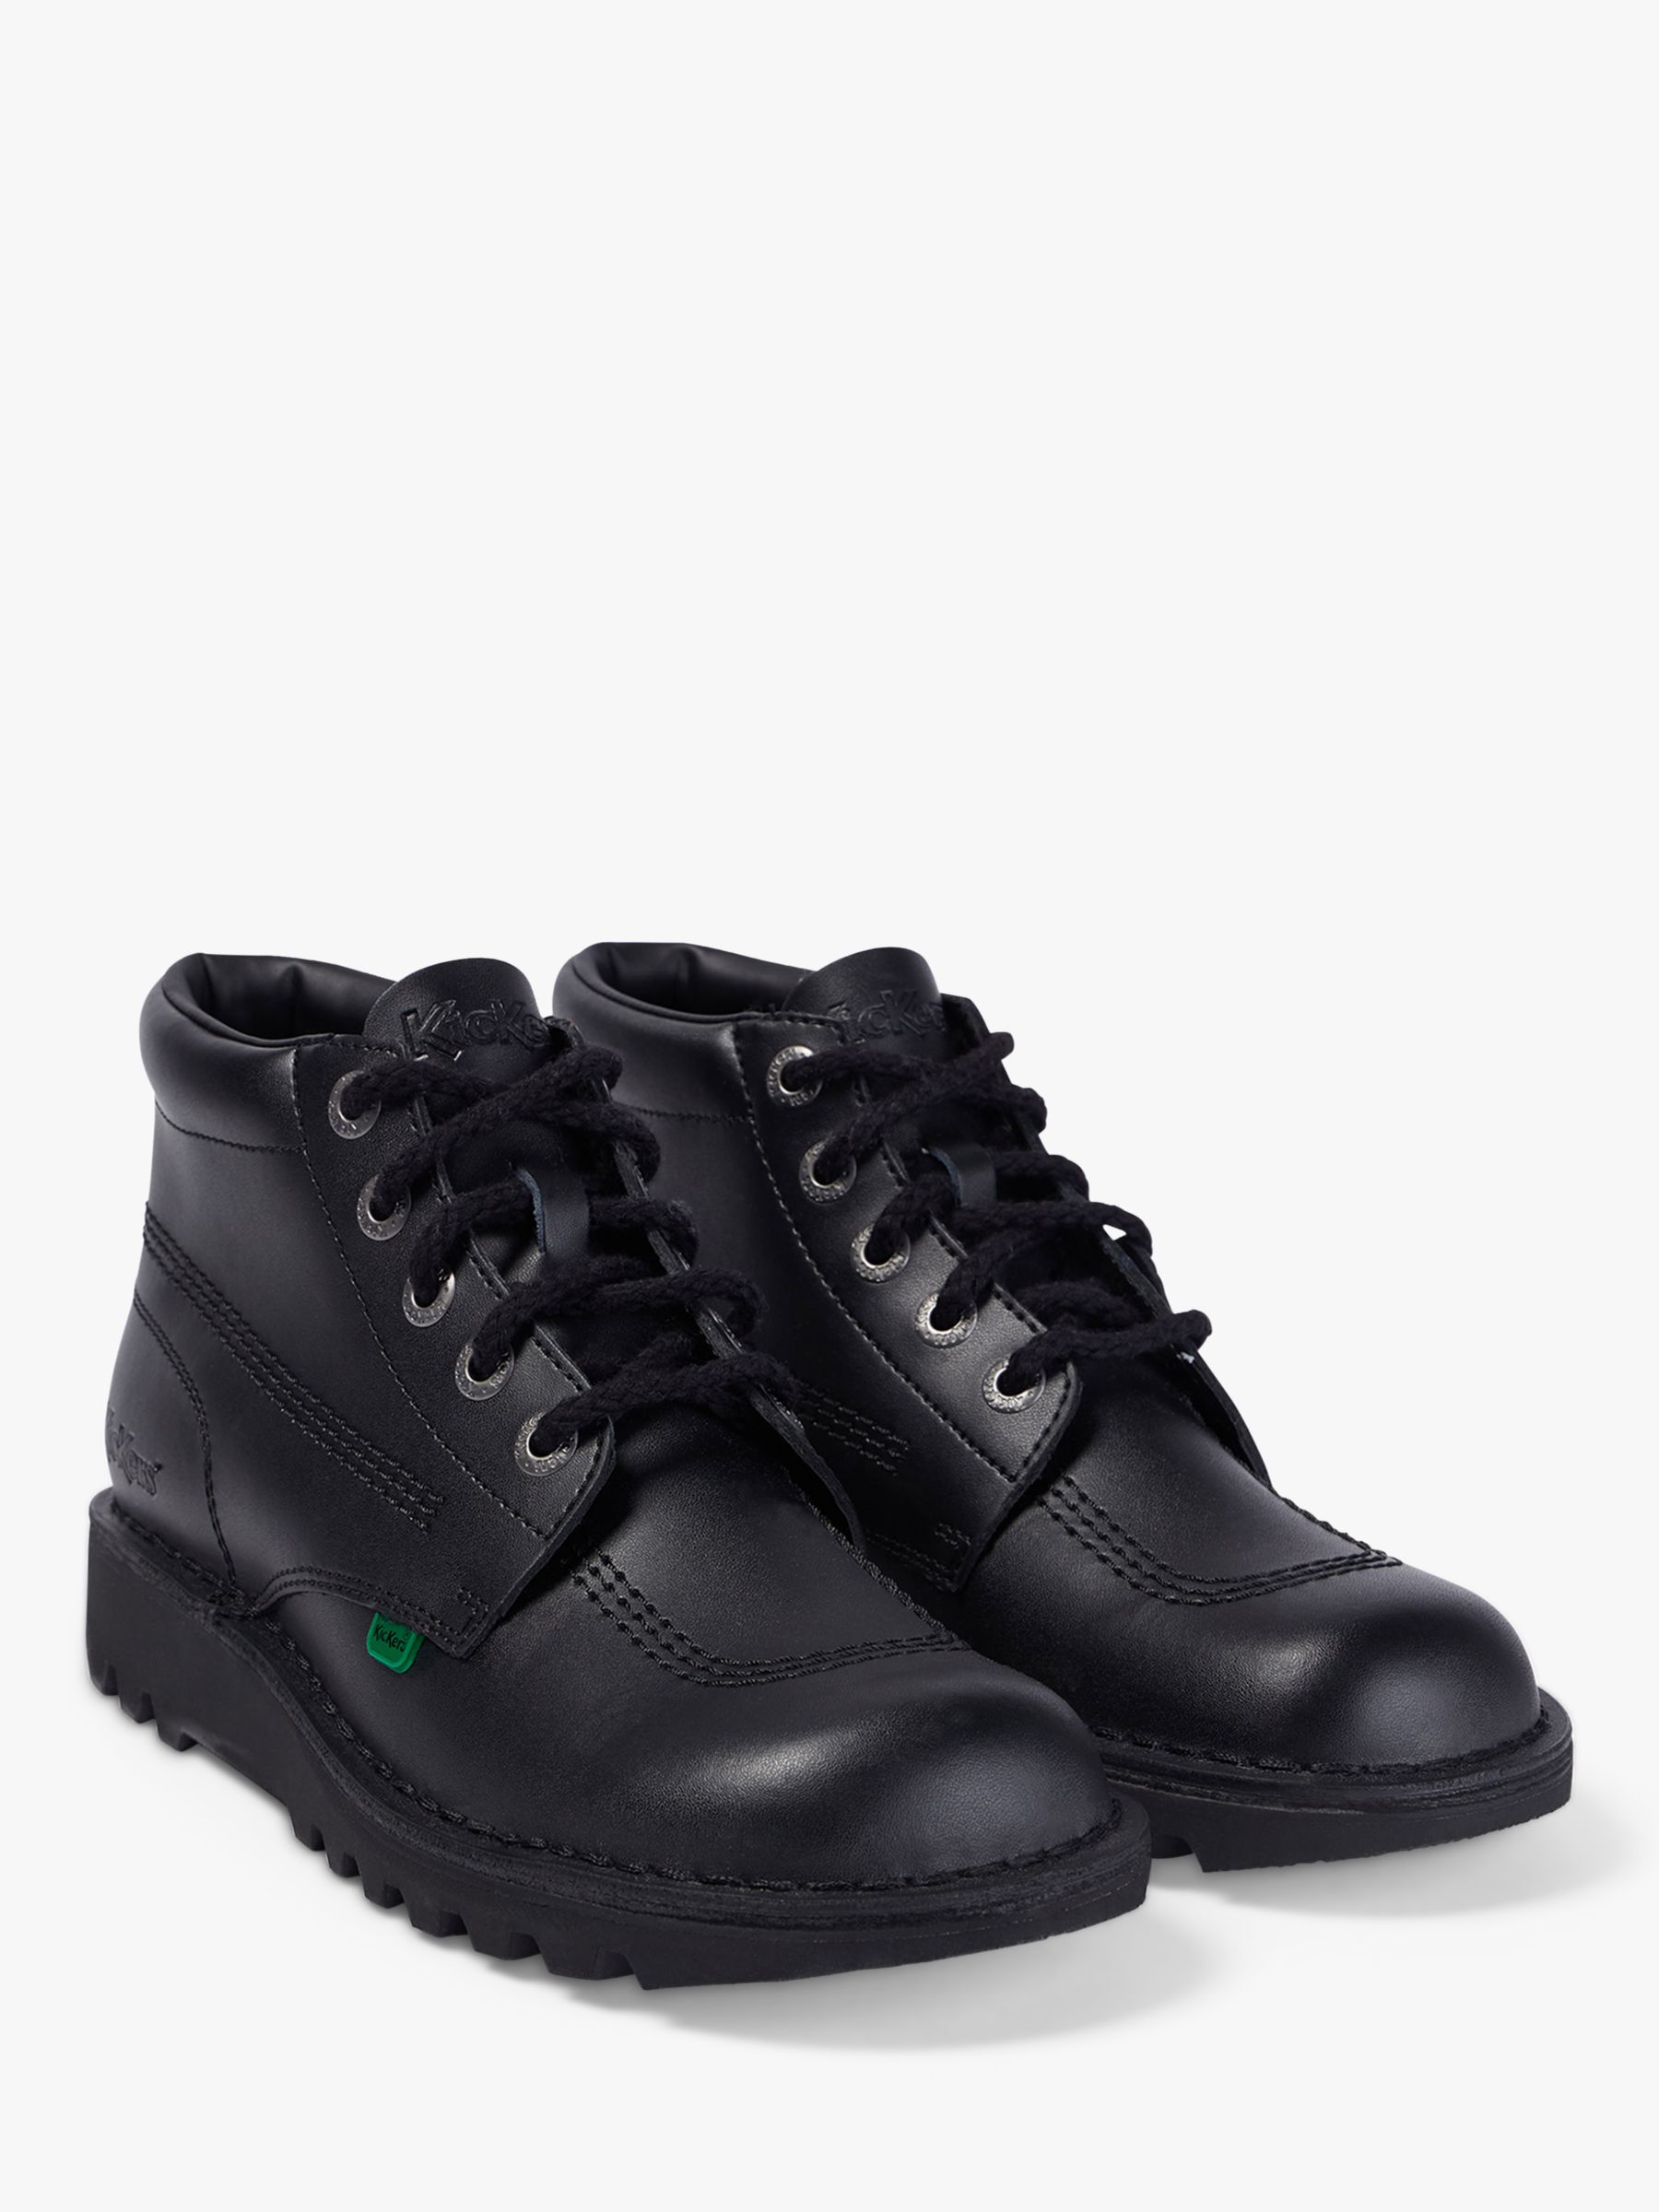 Kickers Kick Hi Leather Boots, Black at John Lewis & Partners